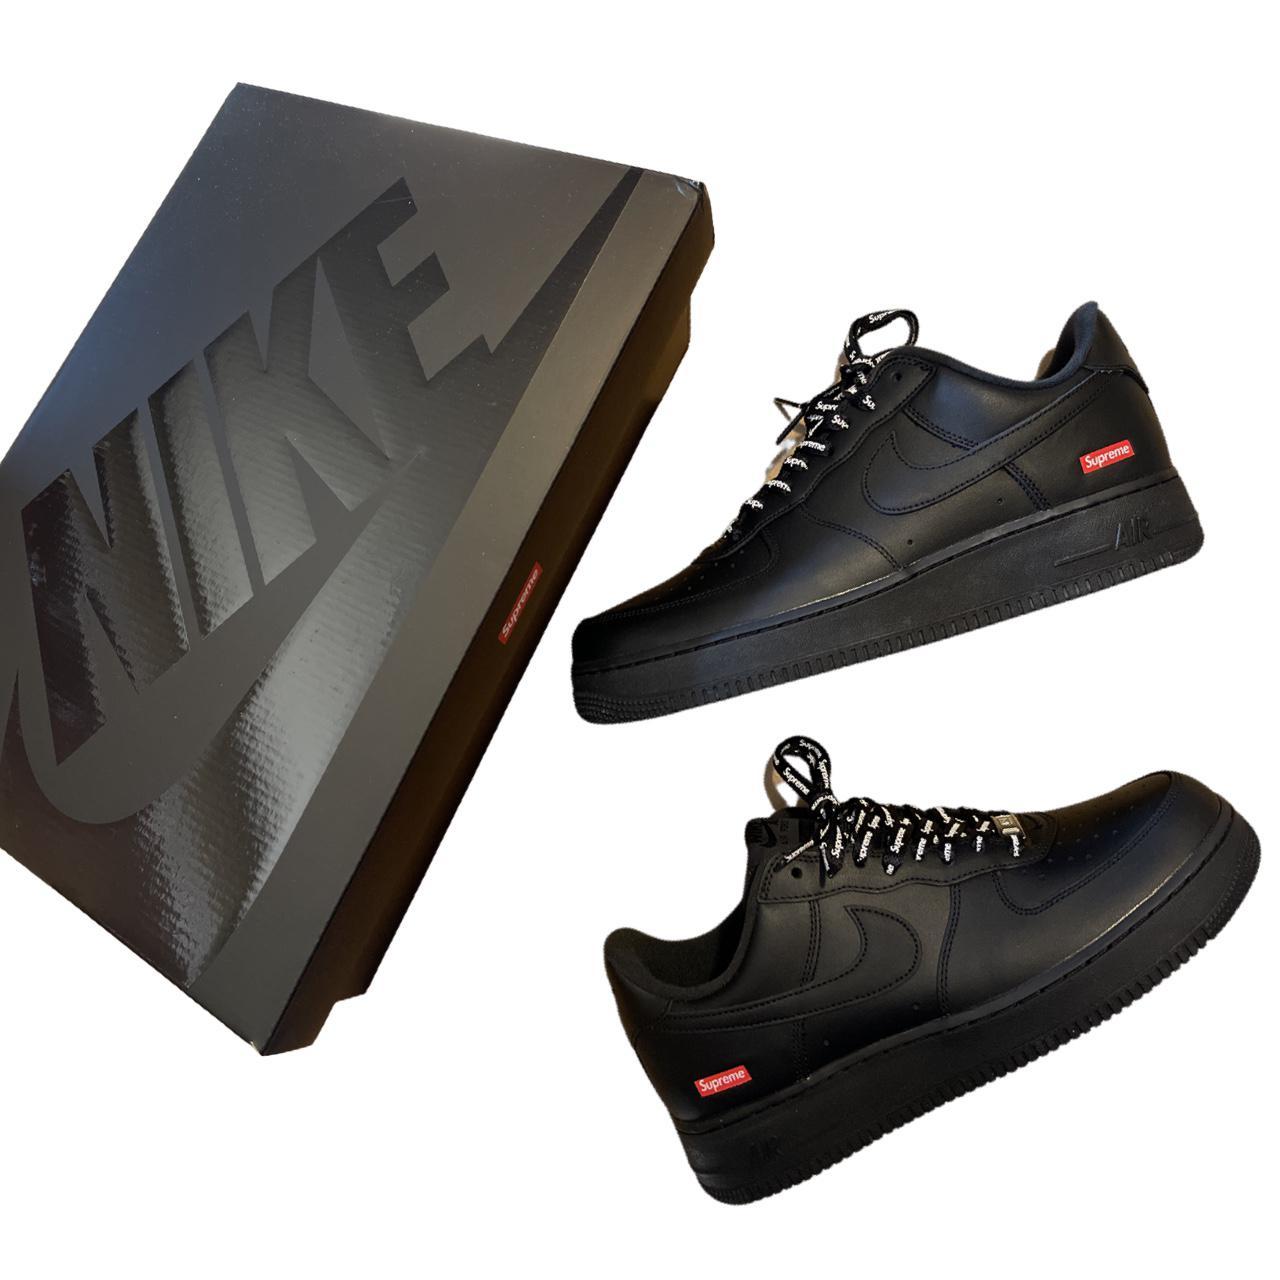 Nike x cdg x supreme Airforce 1 Super rare shoe, - Depop